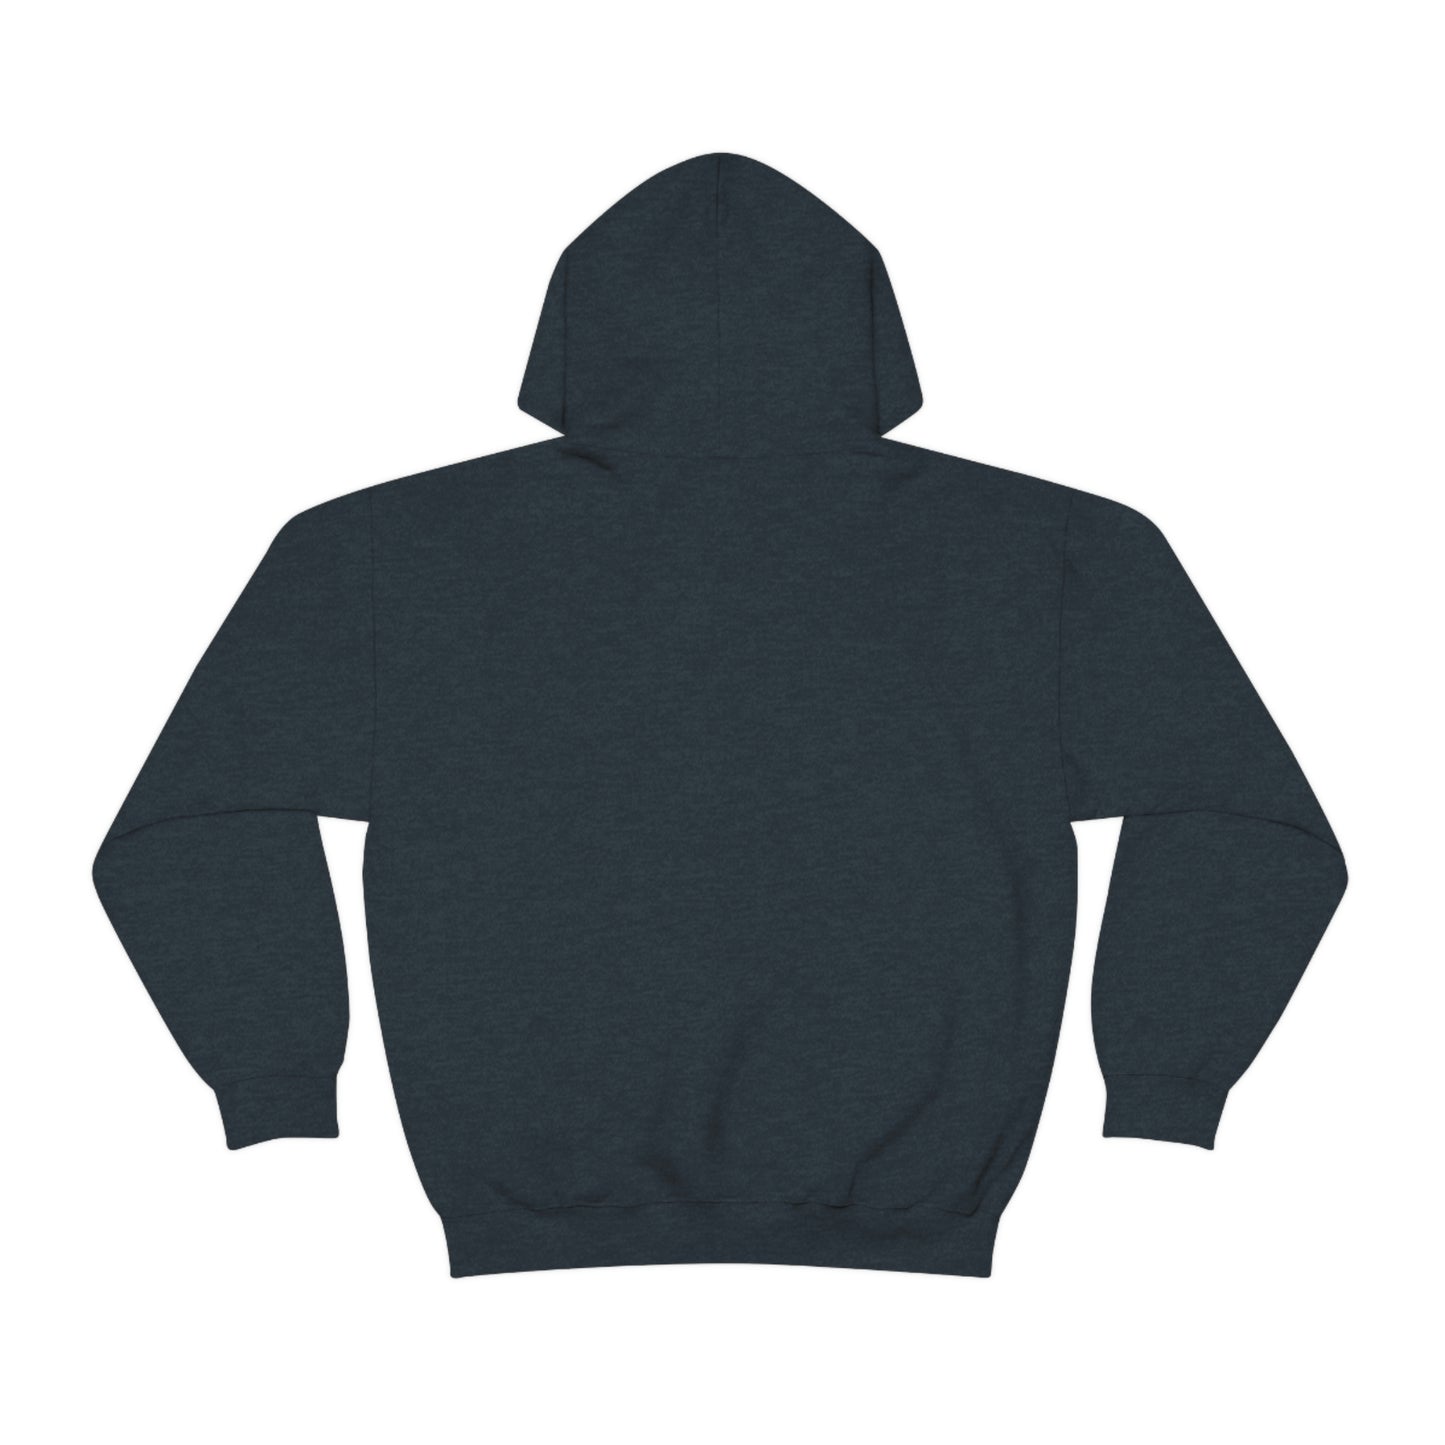 "Northern Range" Unisex Heavy Blend™ Hooded Sweatshirt